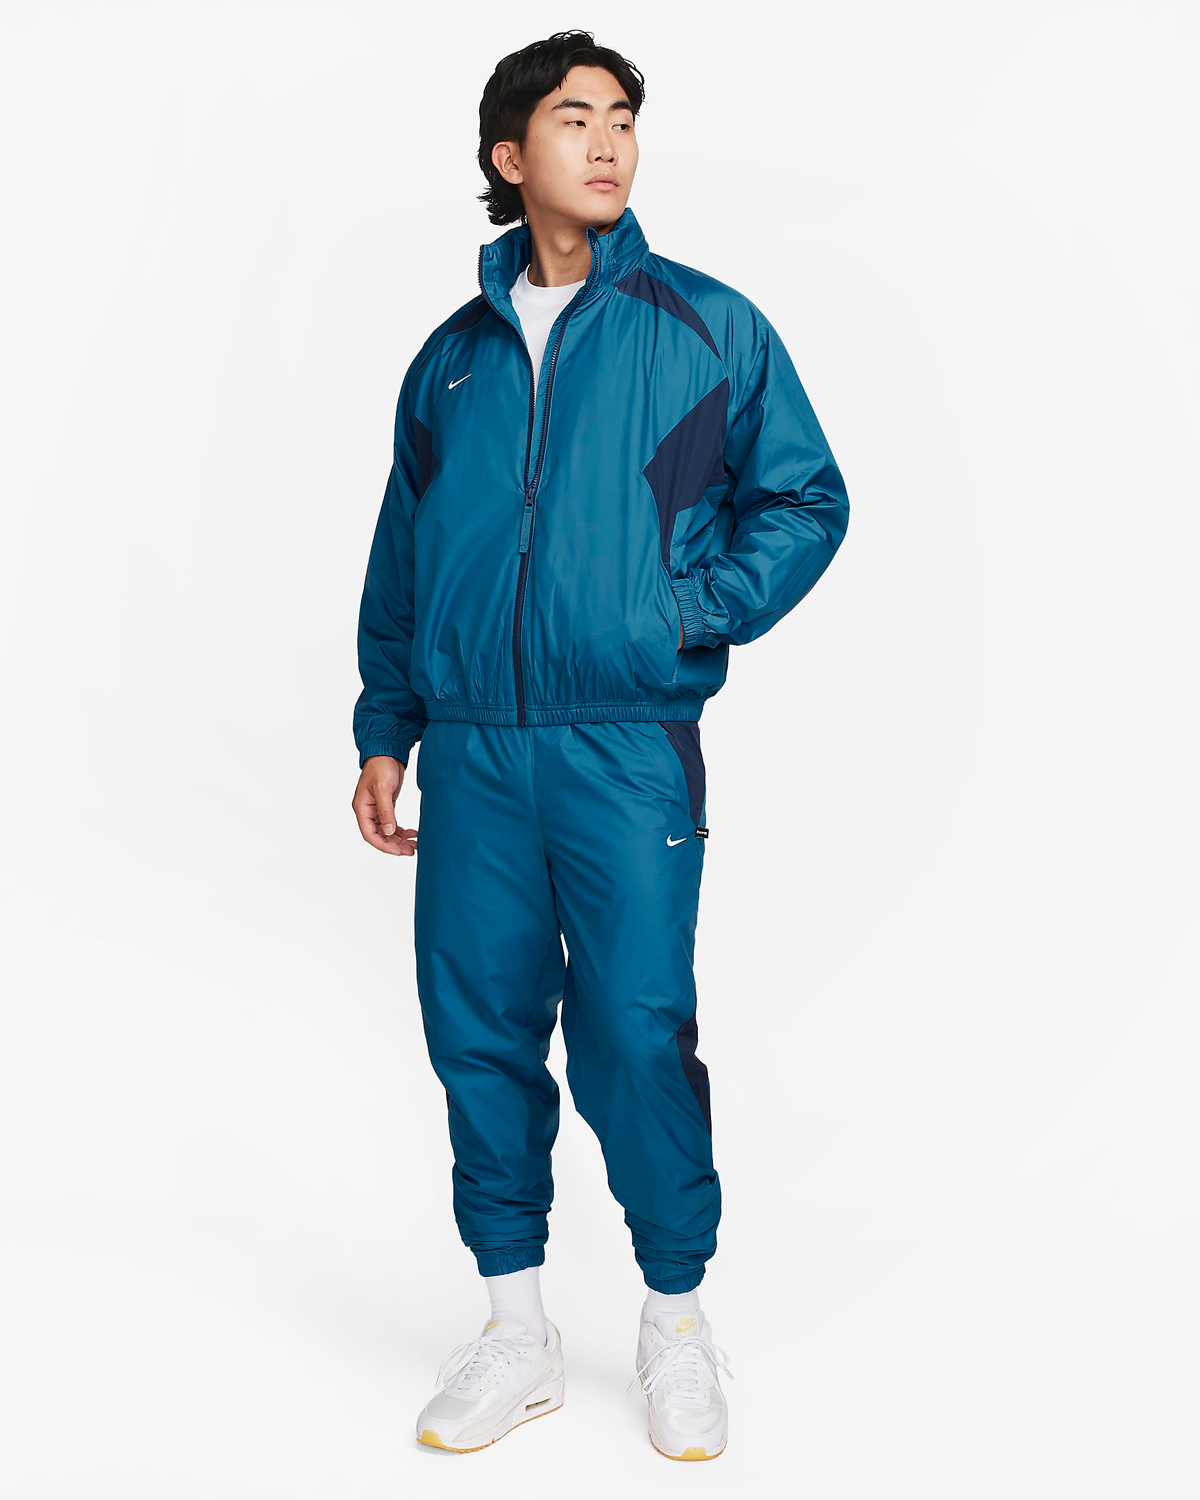 Nike-Industrial-Blue-Clothing